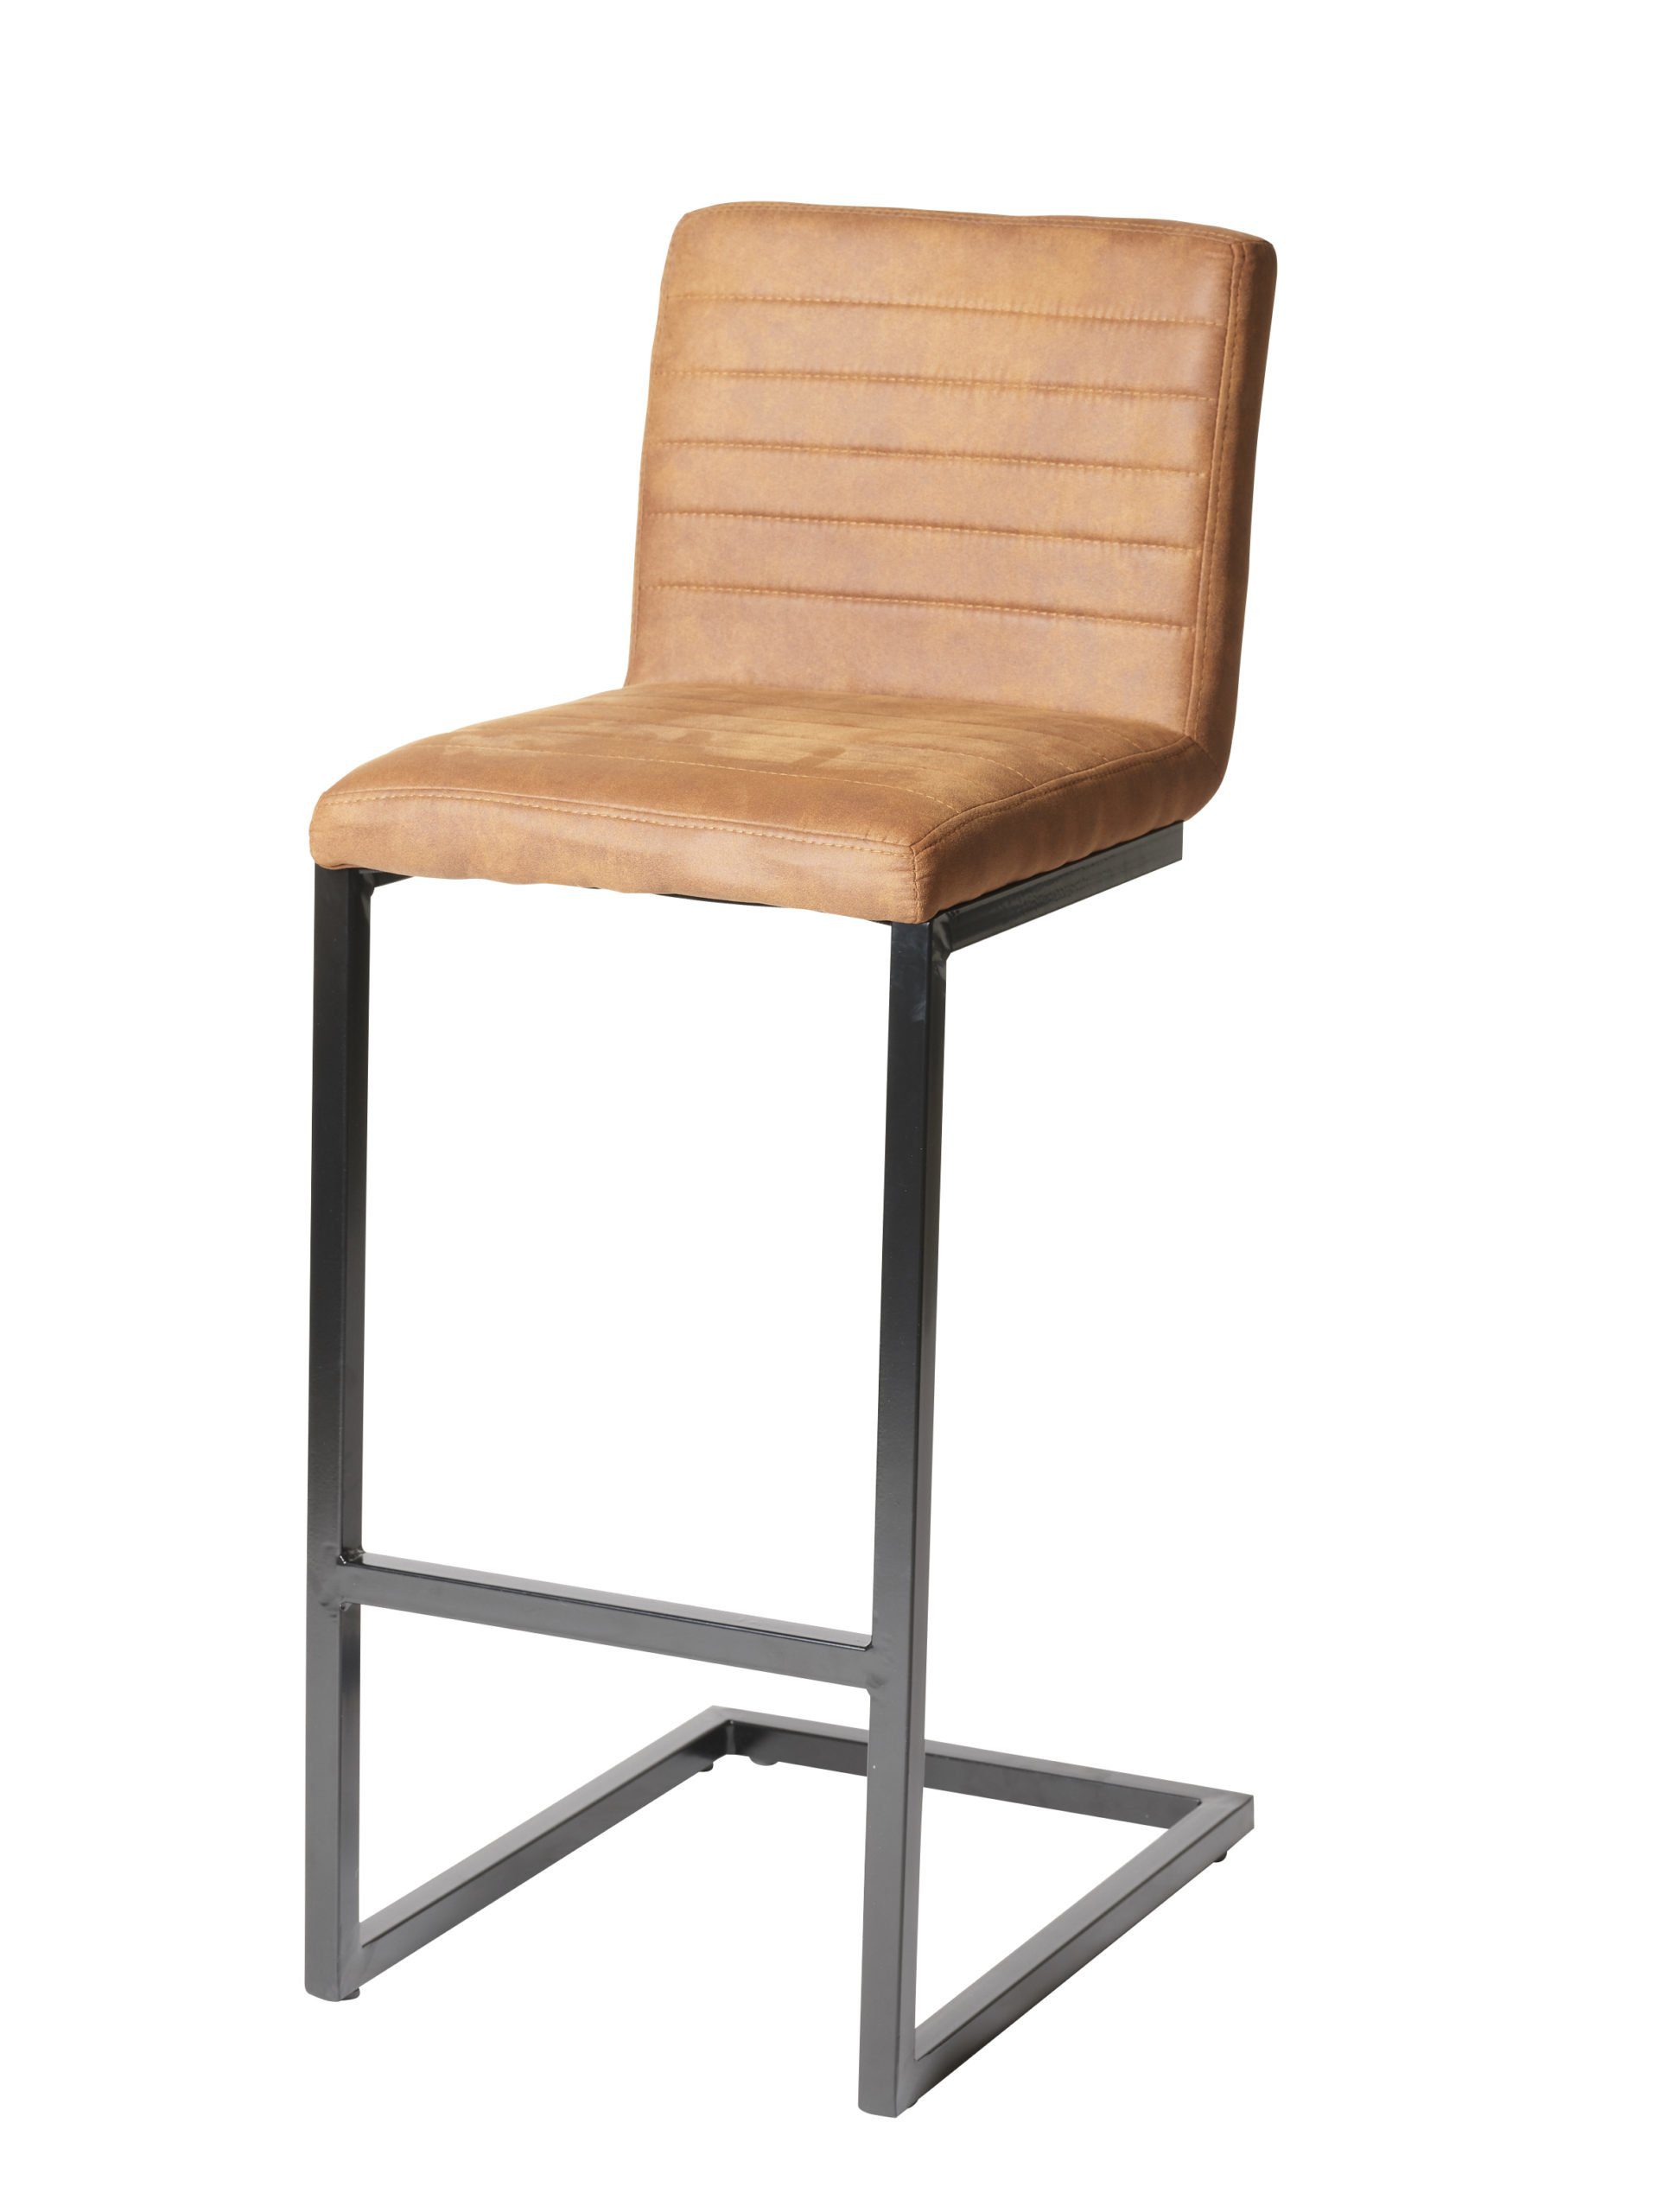 402402 INDEX stoelen scaled 1